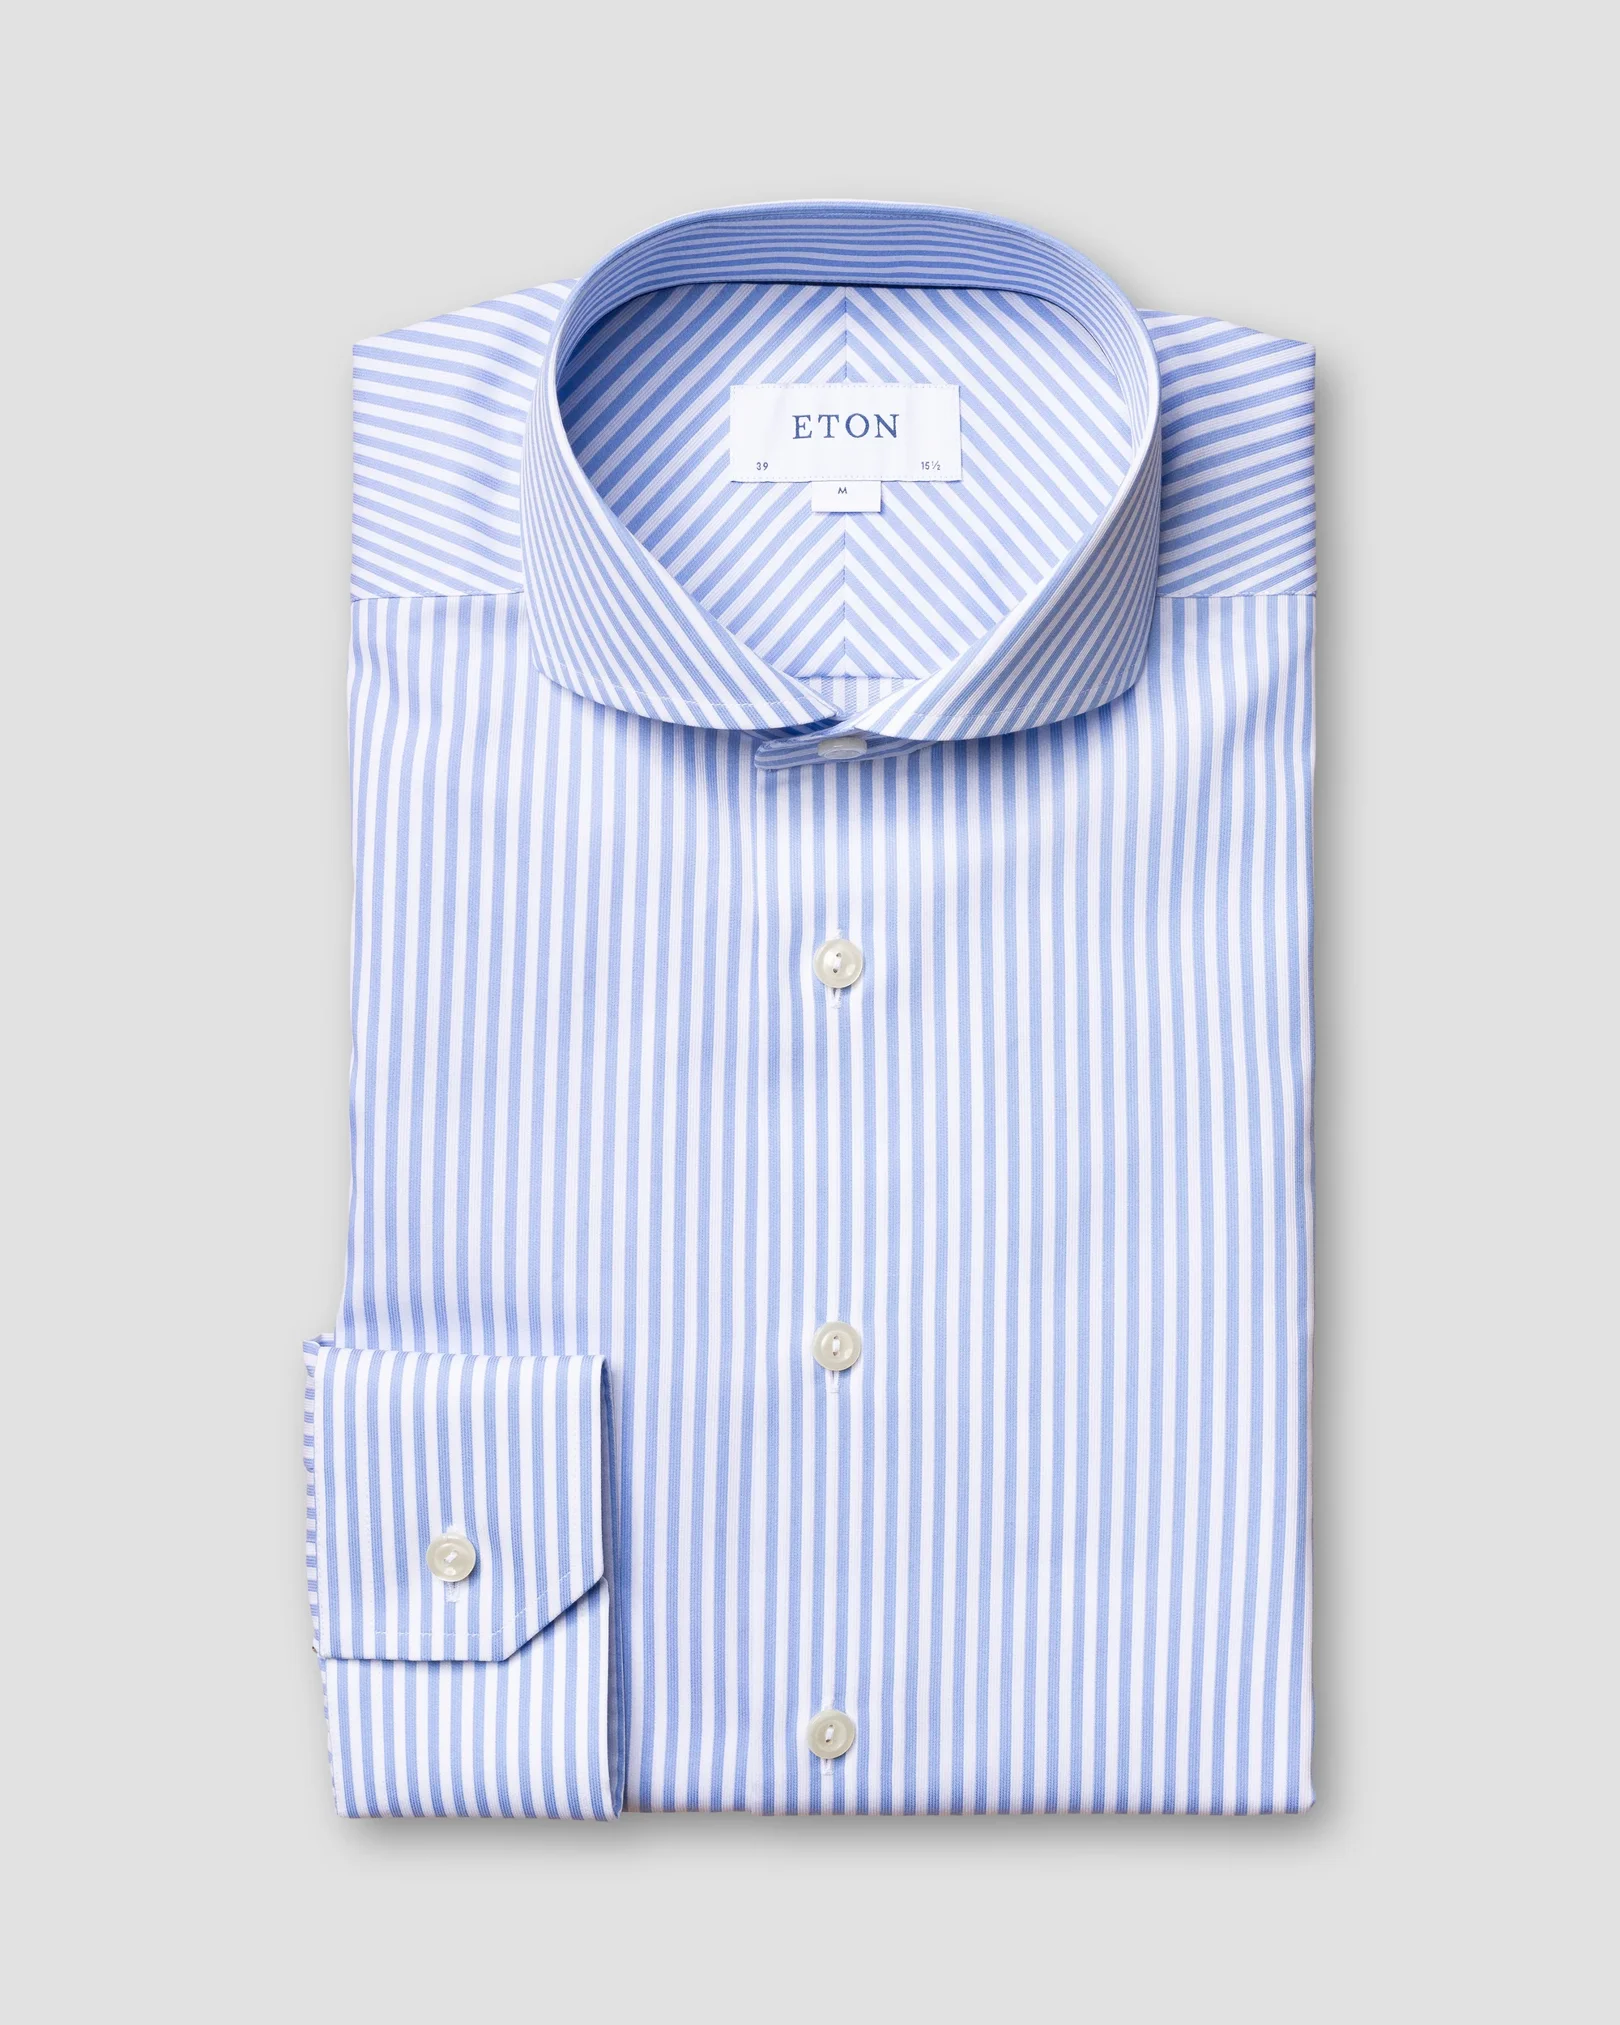 Eton - light blue superfine satin shirt